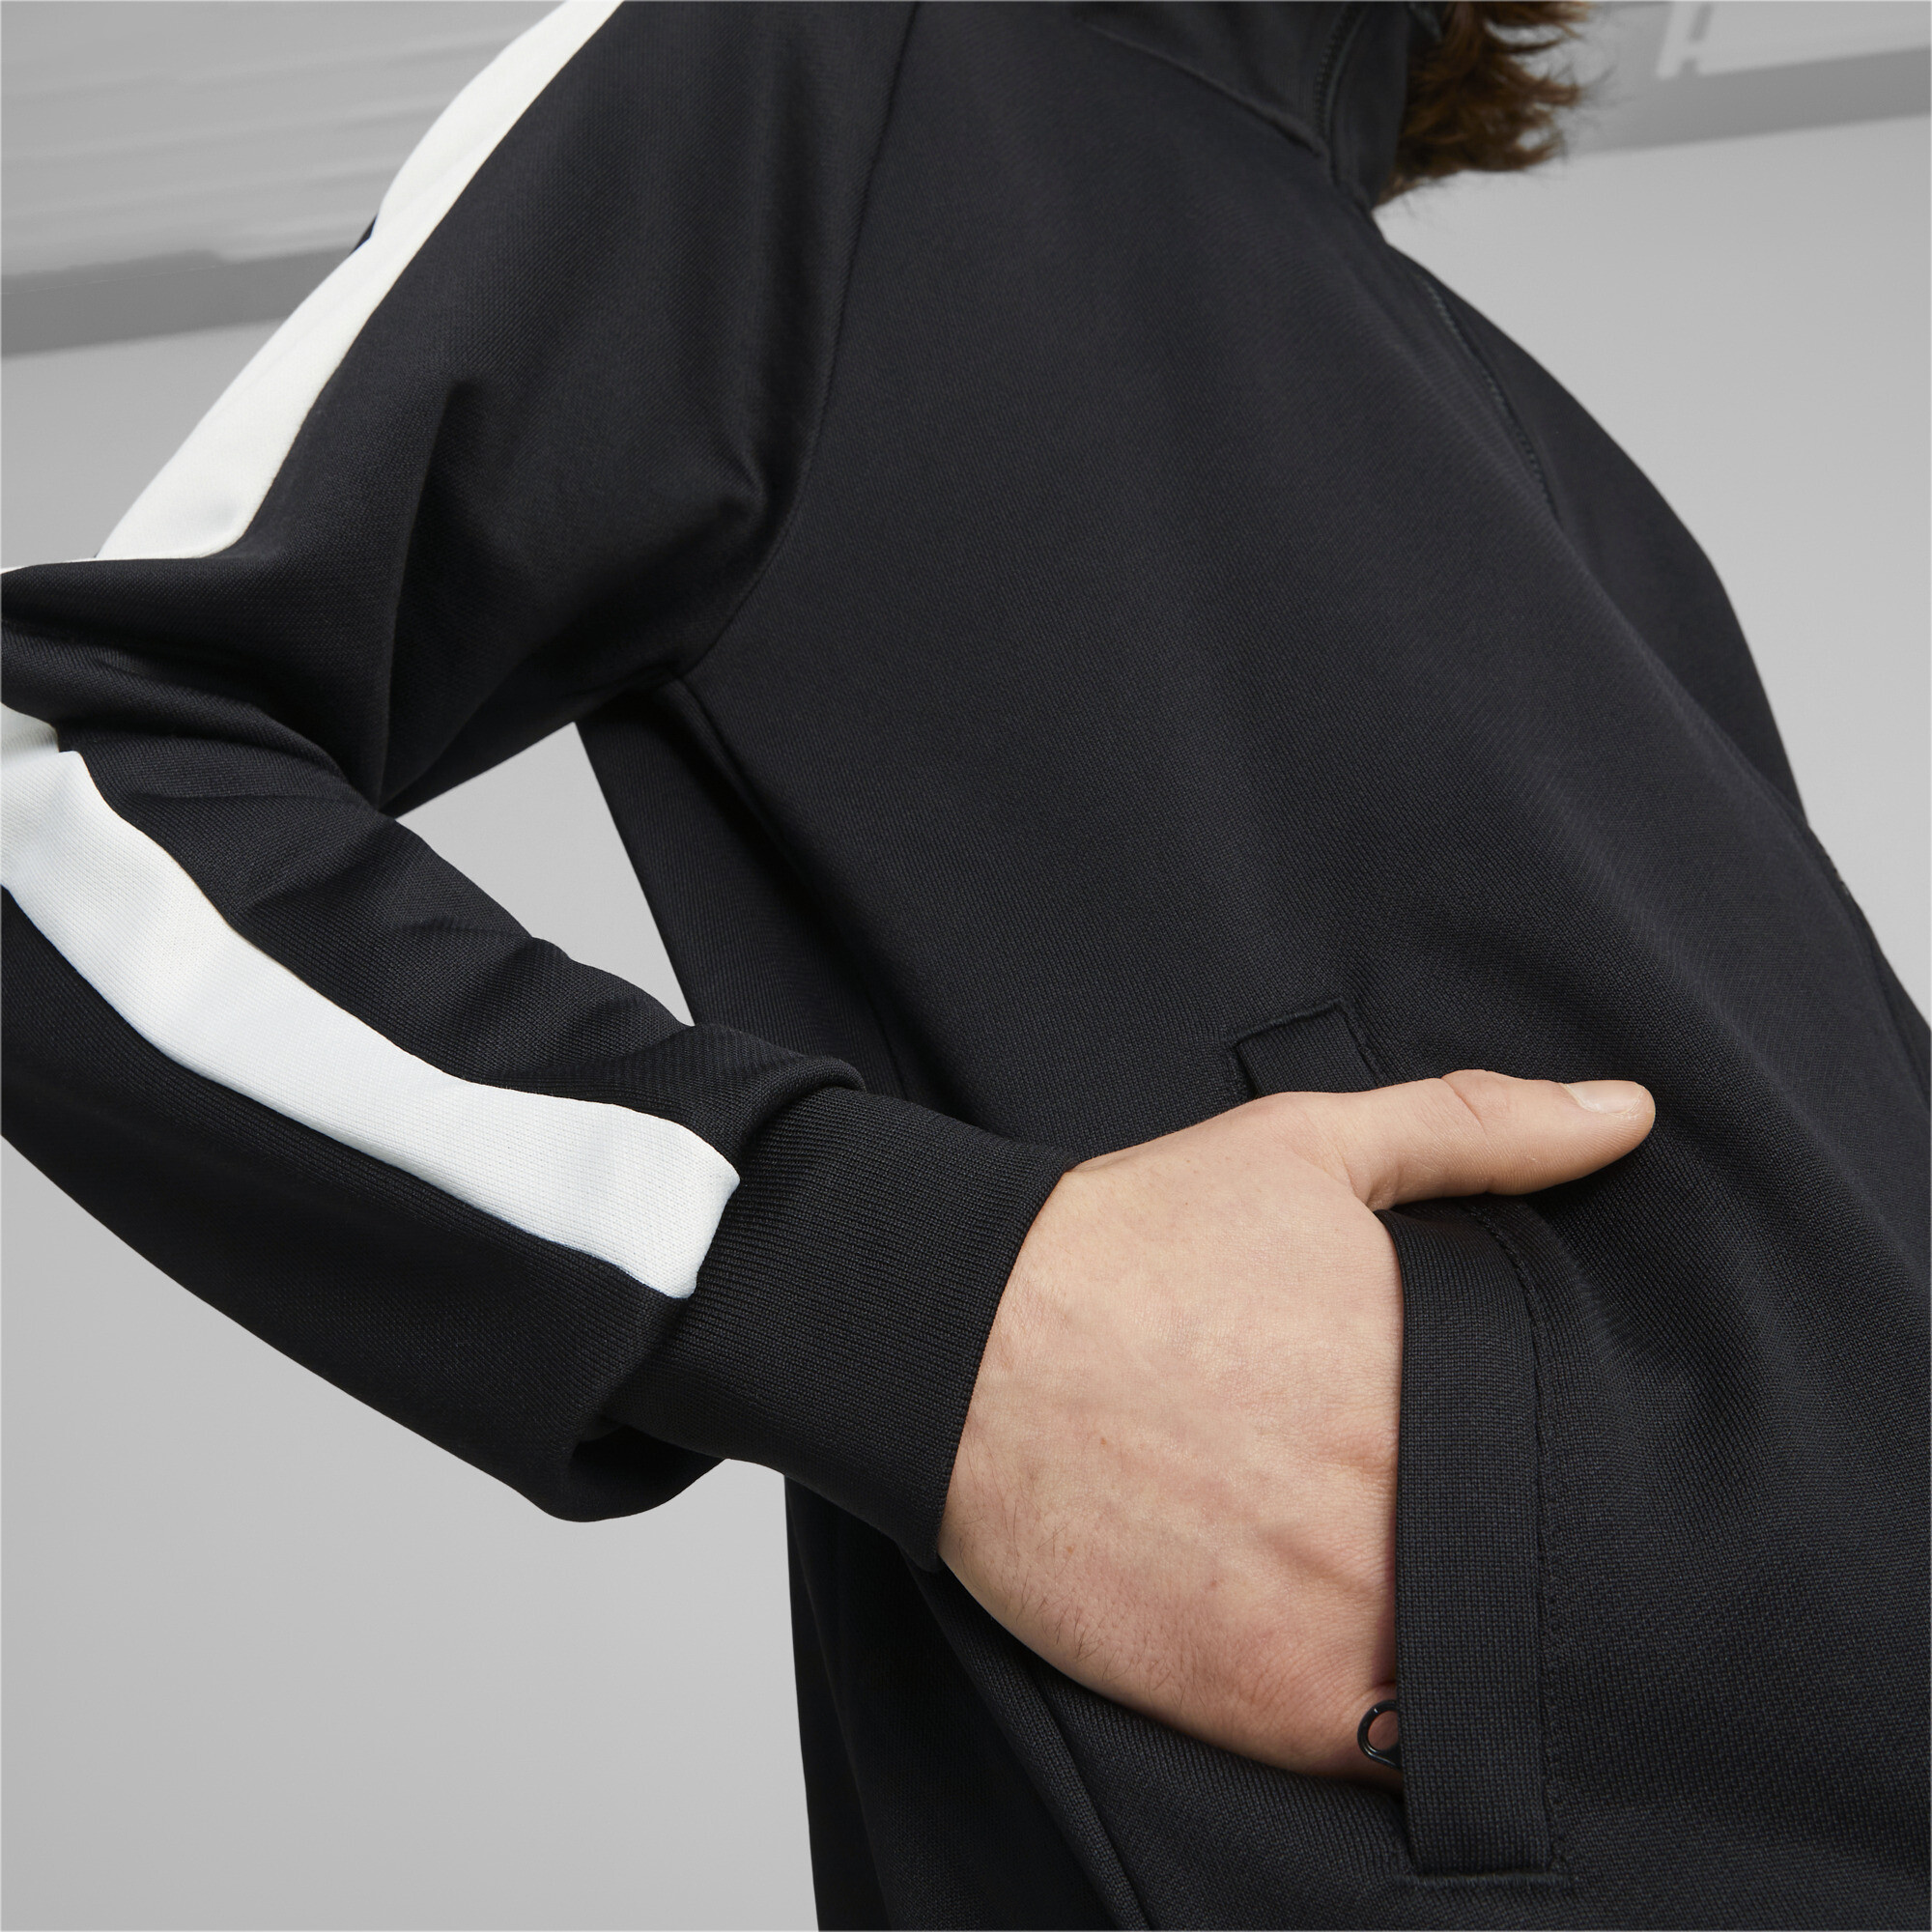 Men's PUMA Iconic T7 Track Jacket In 10 - Black, Size XL